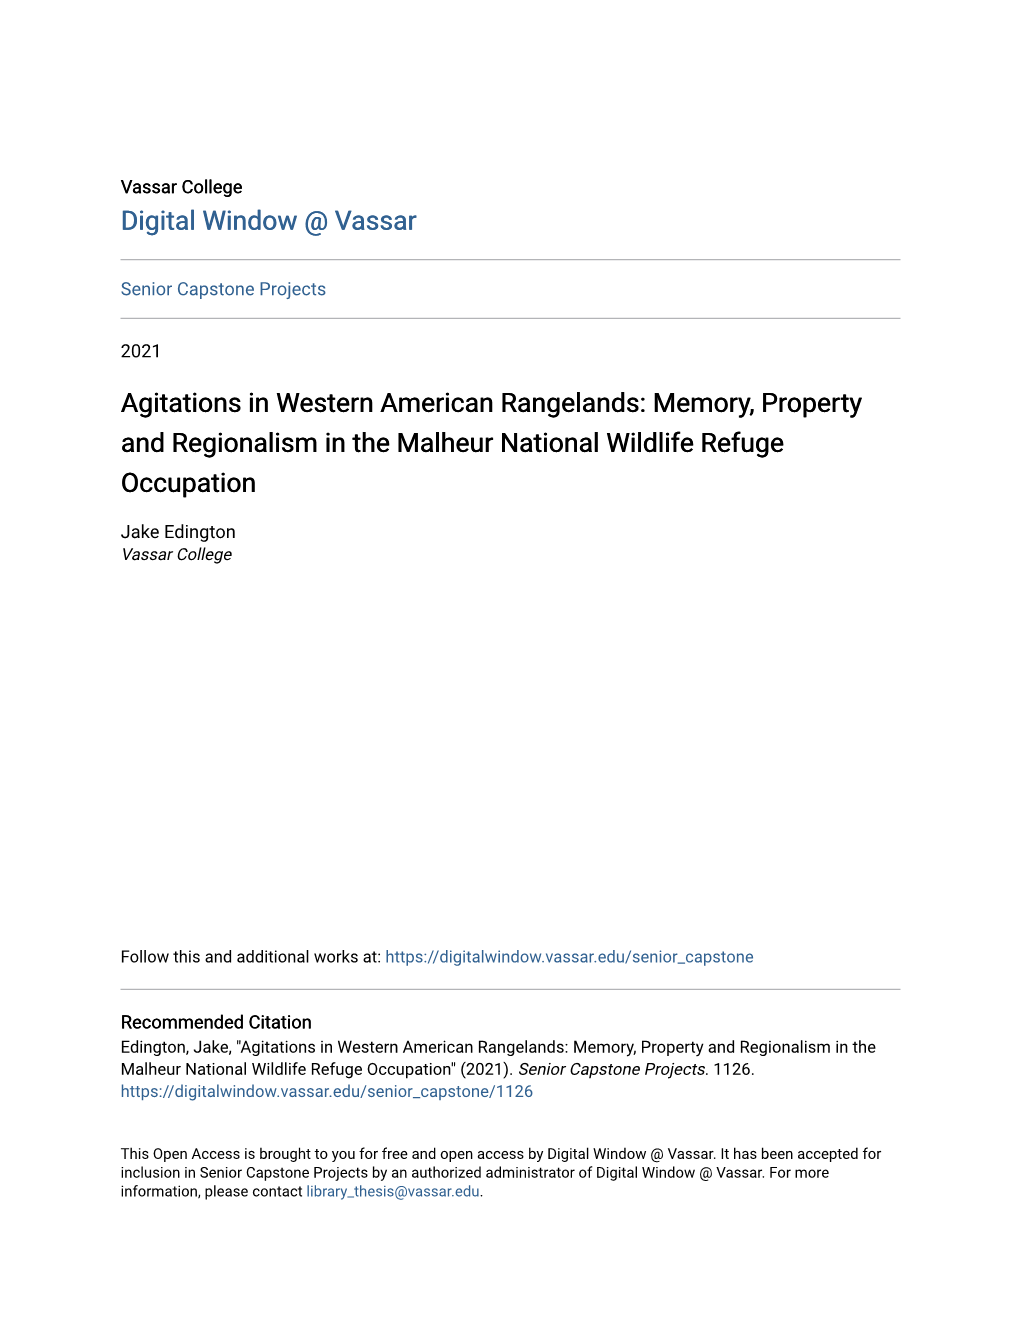 Agitations in Western American Rangelands: Memory, Property and Regionalism in the Malheur National Wildlife Refuge Occupation